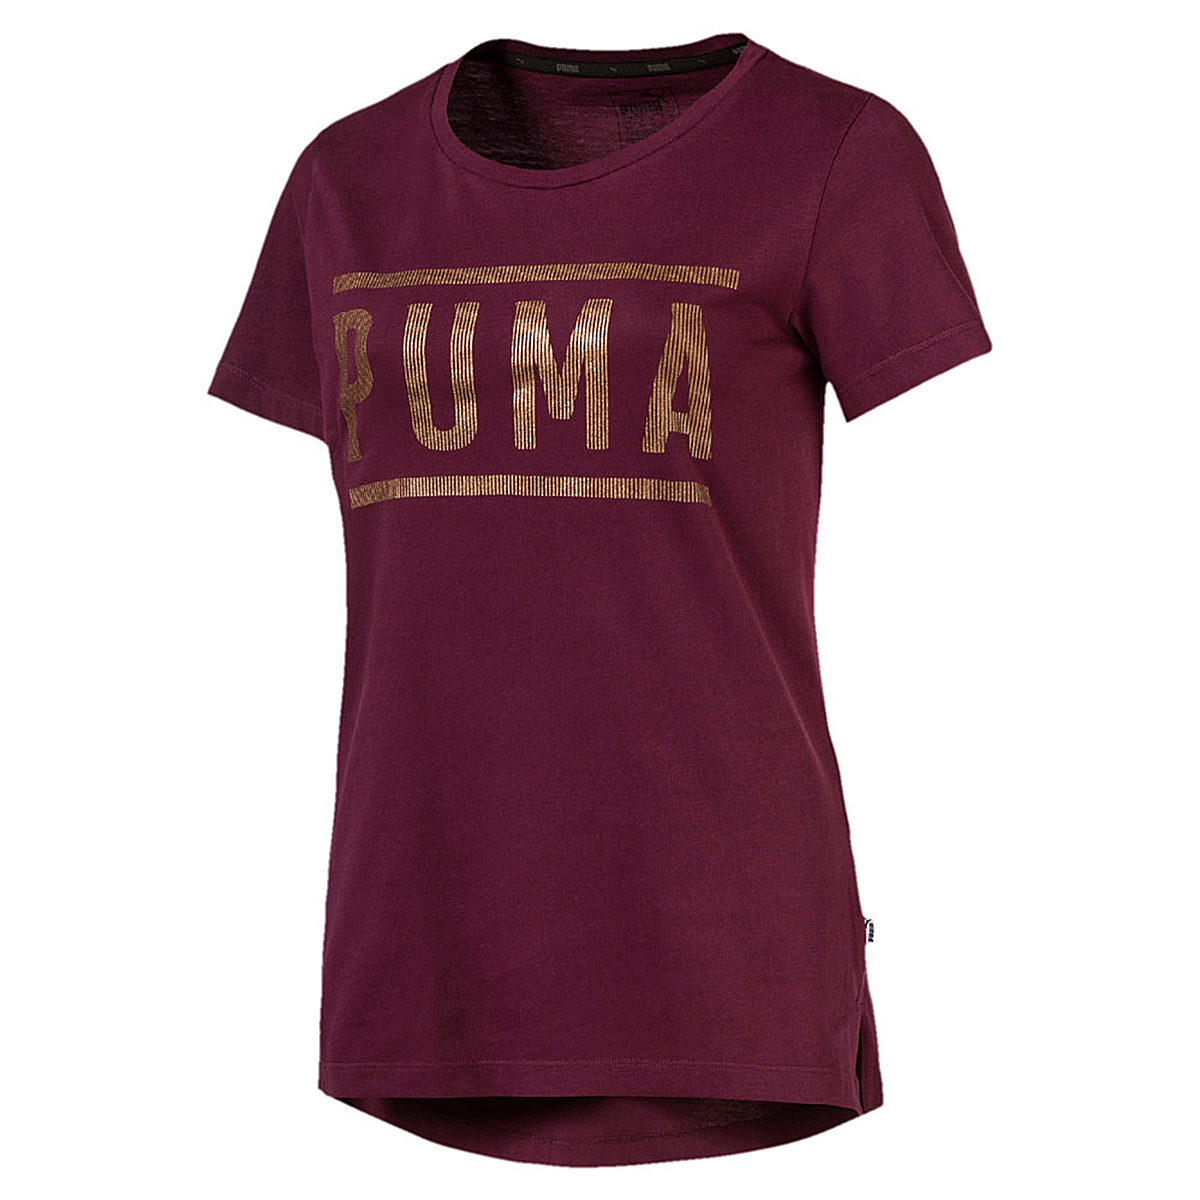 PUMA Athletic Tee Damen T-shirt Sportswear 851857 22 violett